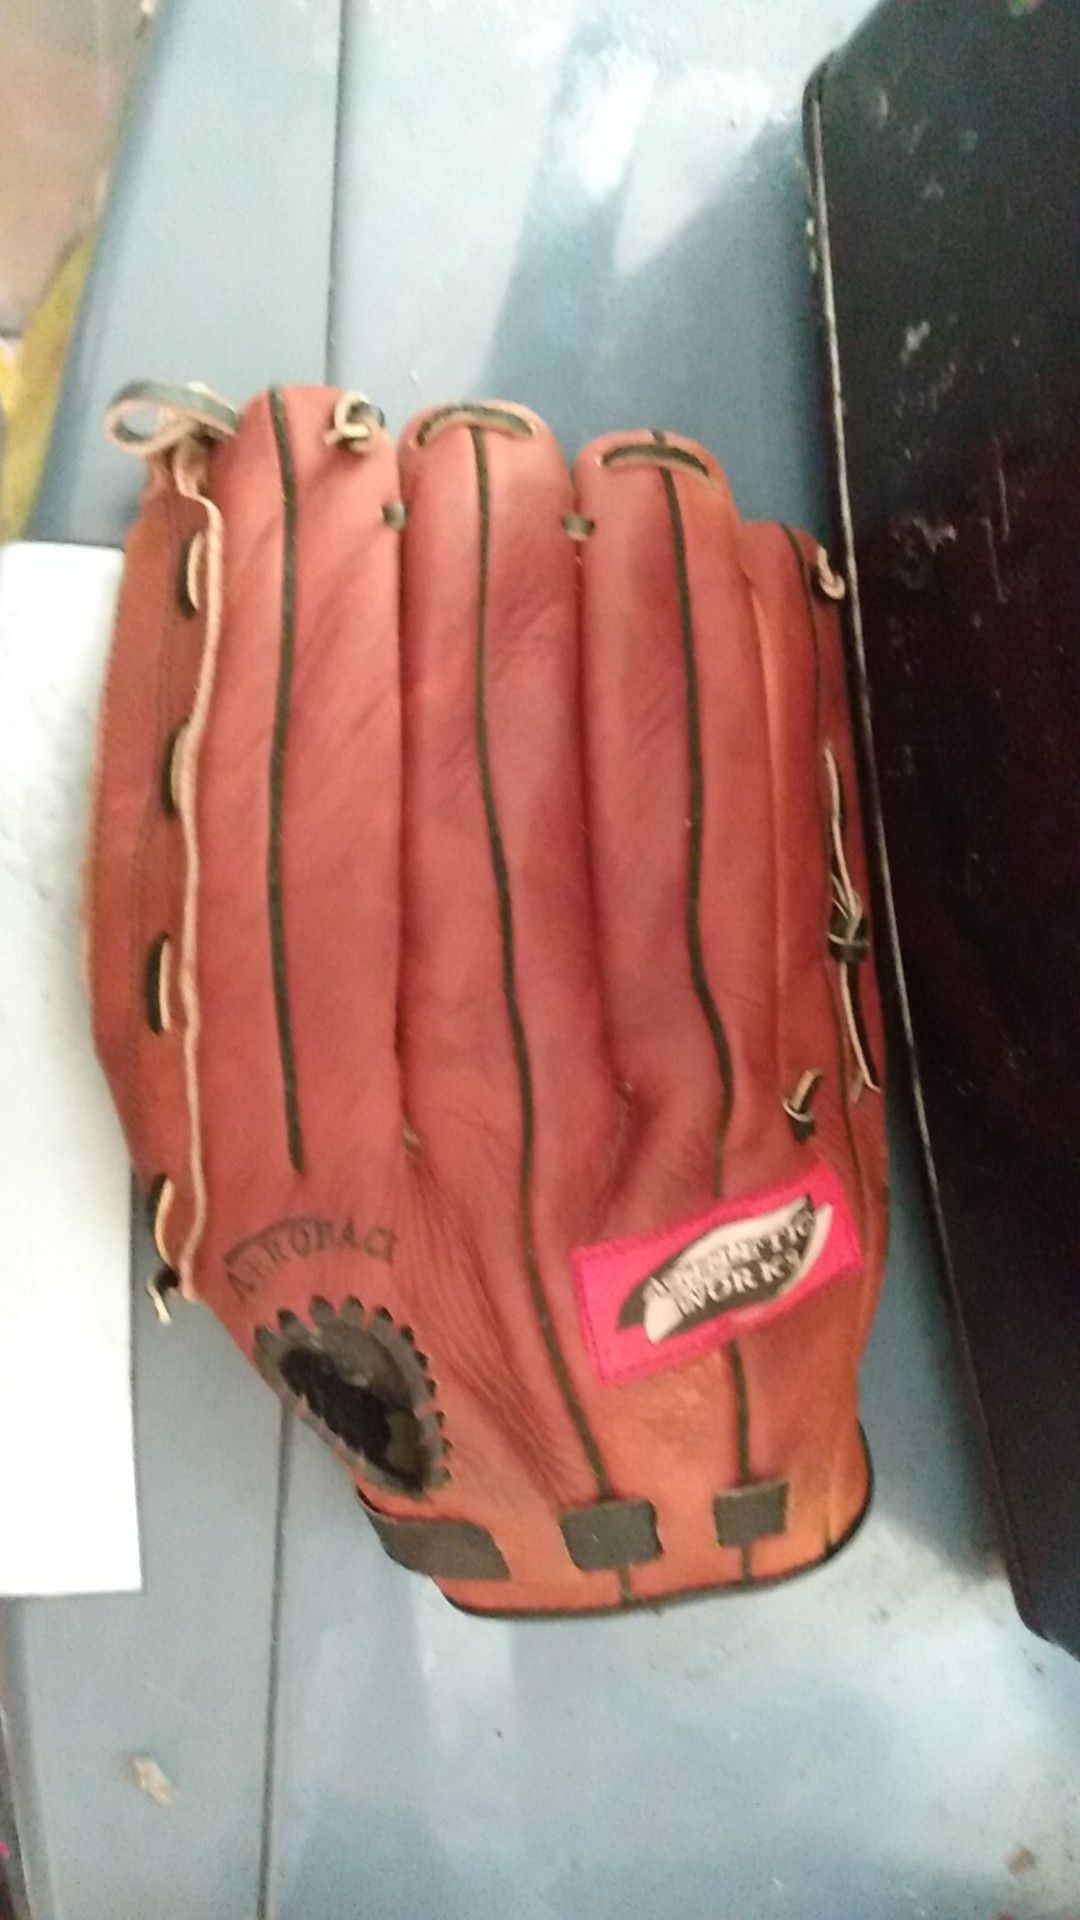 Right handed baseball glove